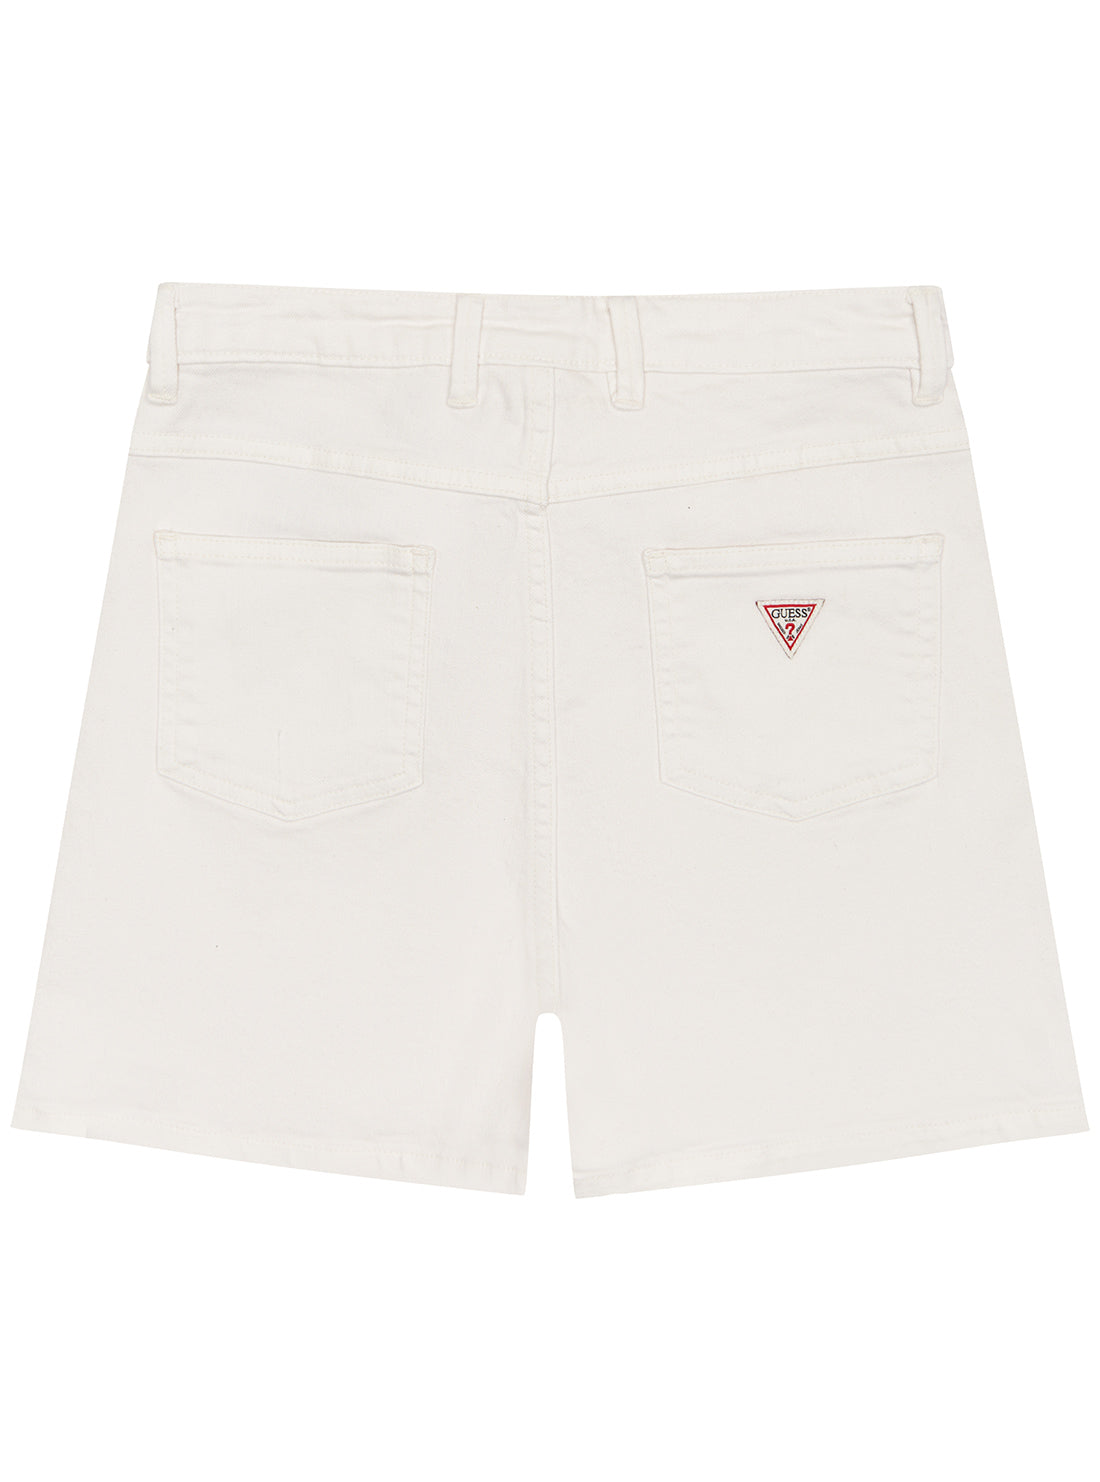 White Bull Denim Shorts (7-16) | GUESS Kids | back view